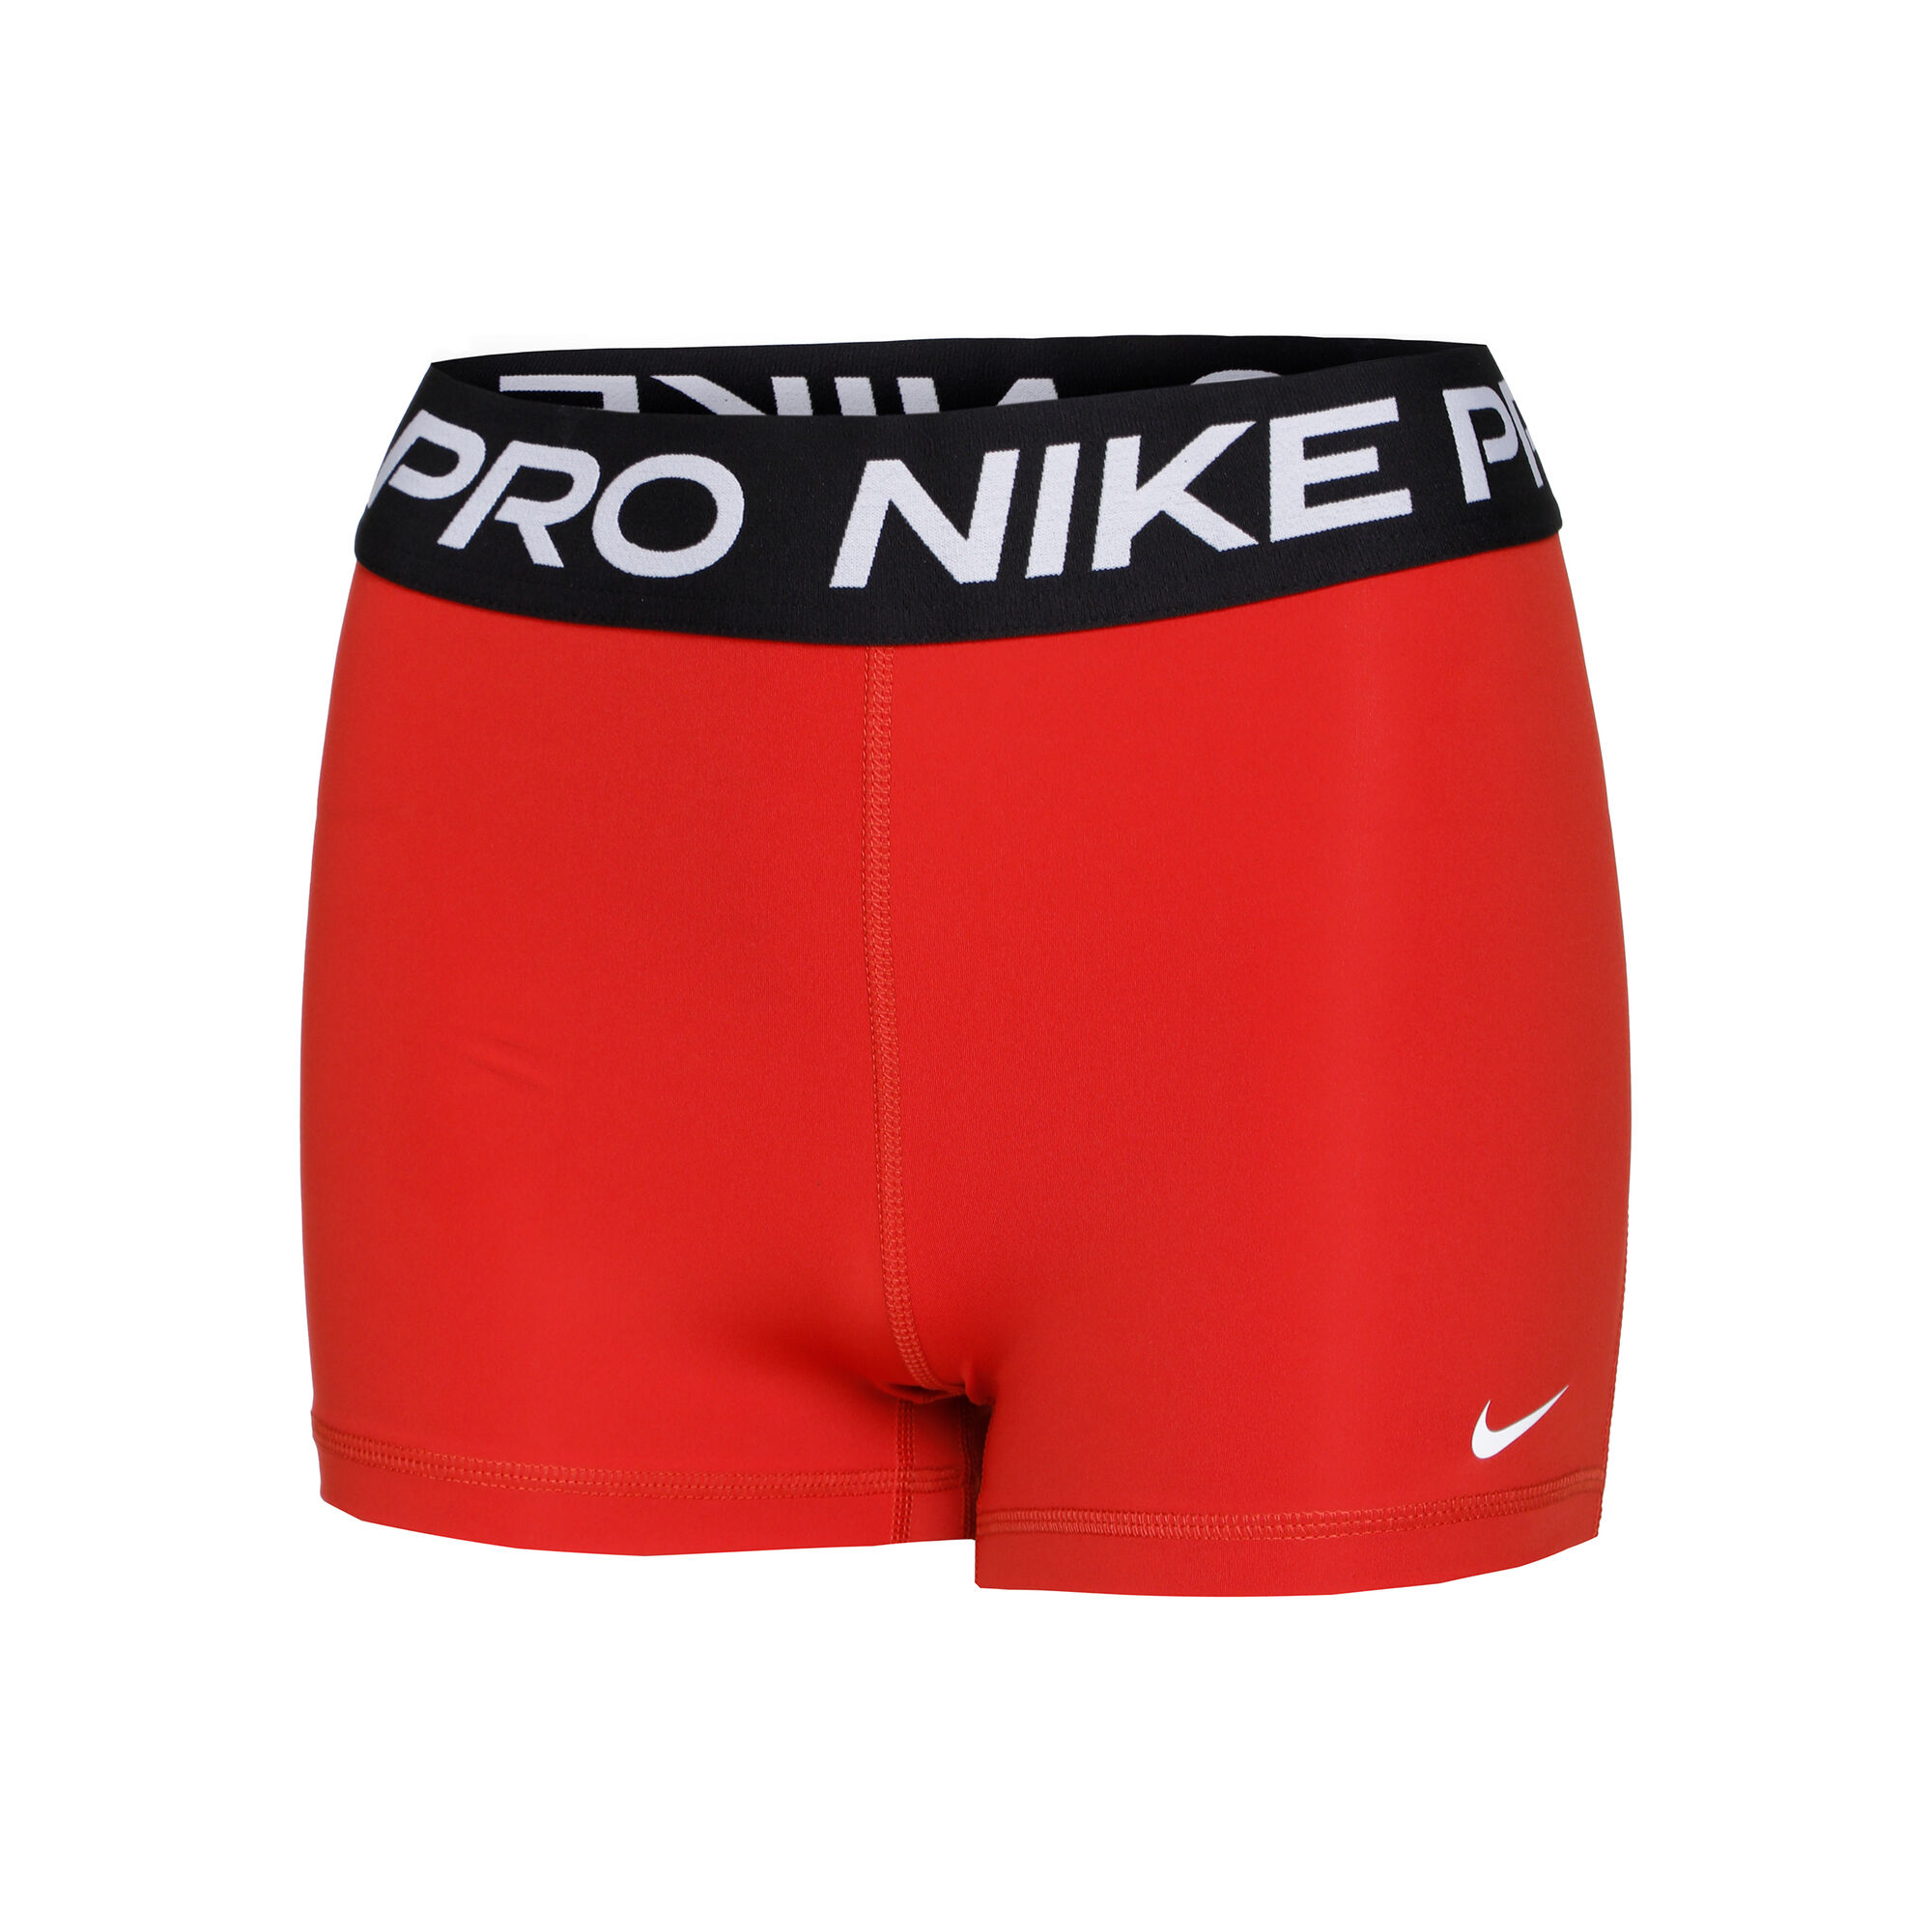 Buy Nike Pro Shorts Mujeres Rojo, Negro online